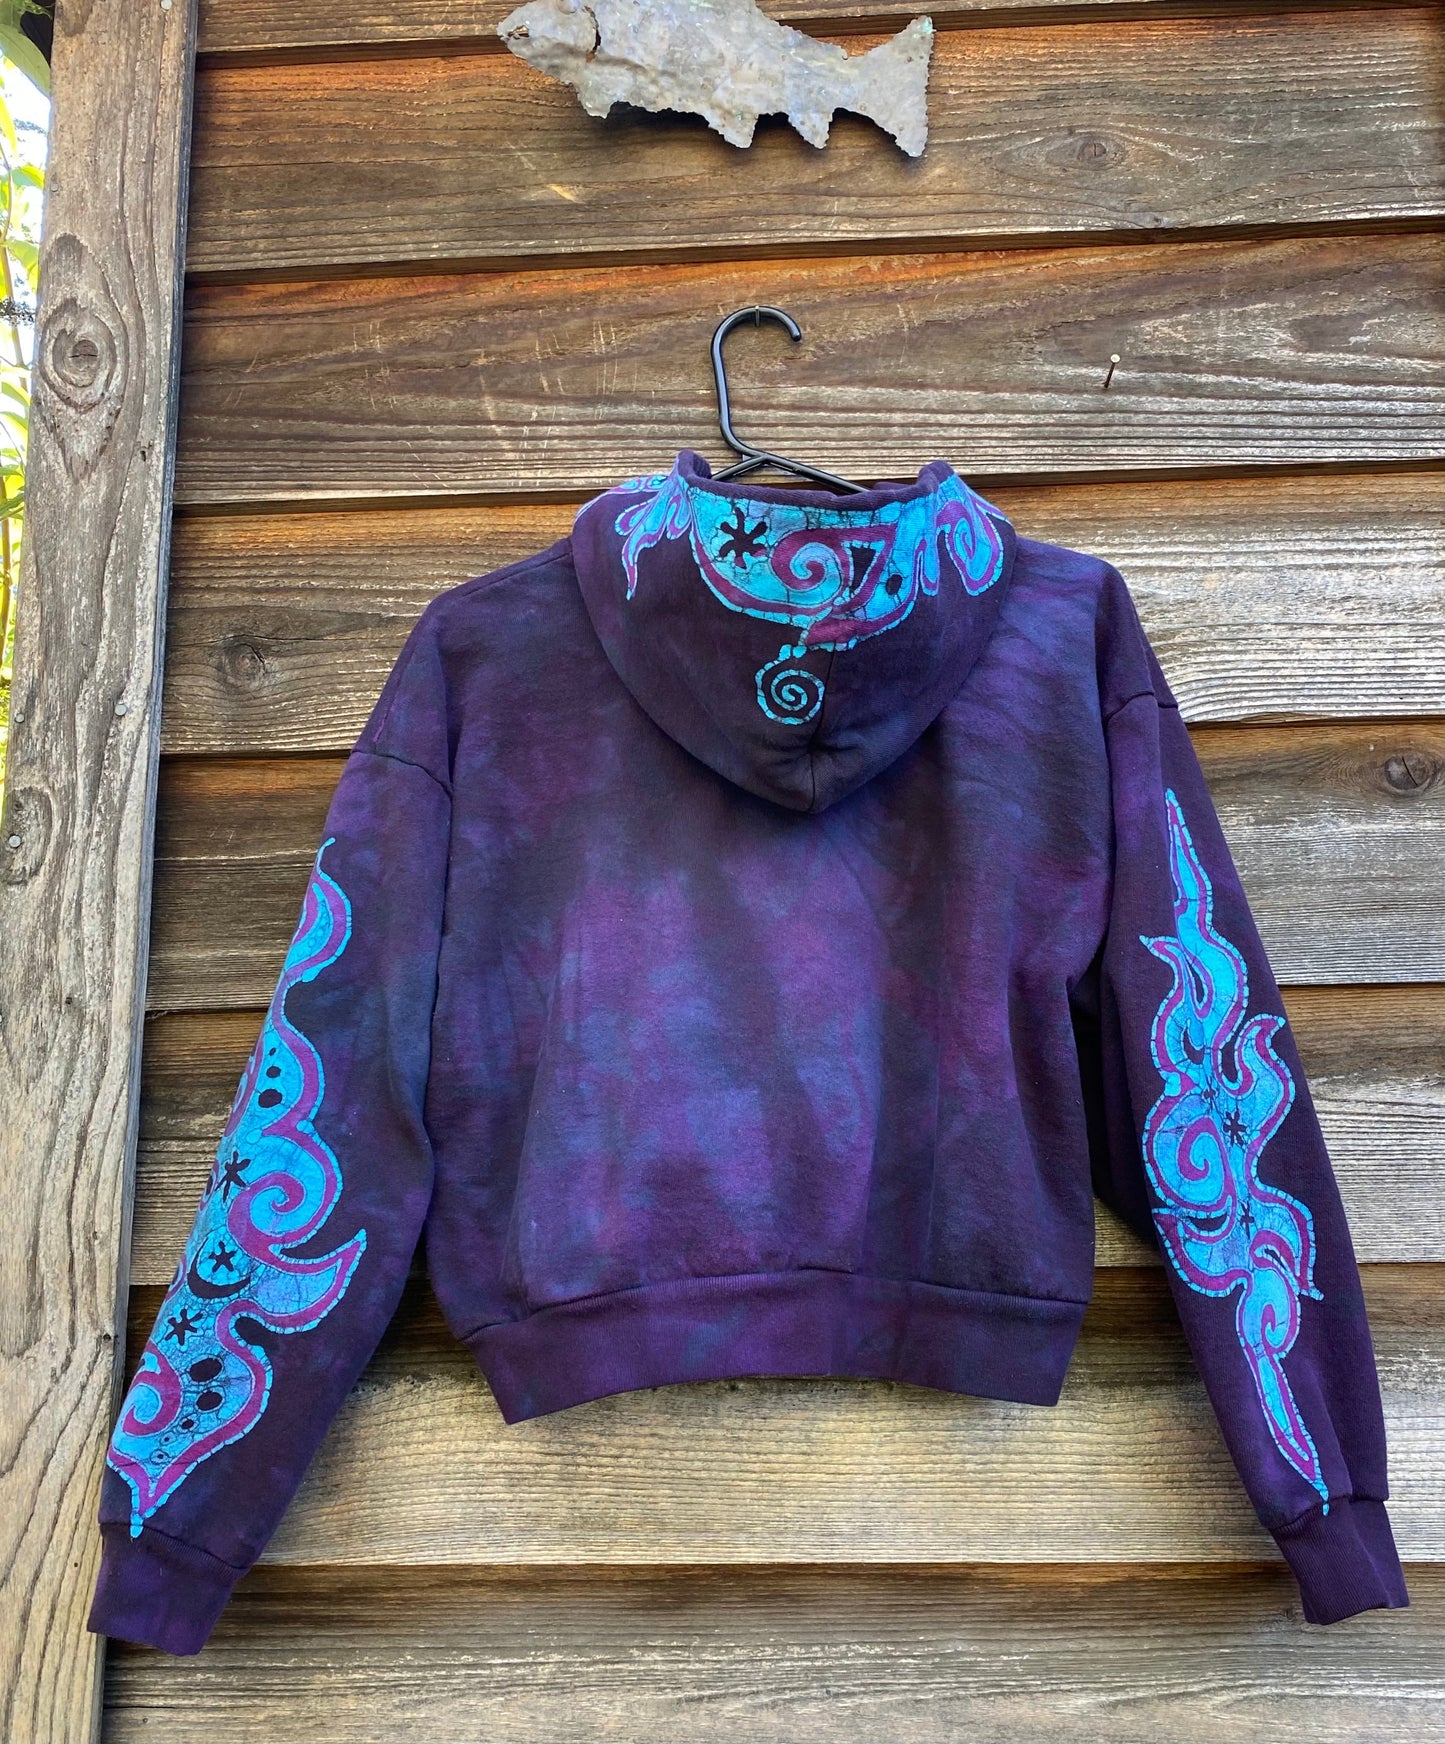 Midnight Purple with Turquoise Flames Handmade Batik Hoodie - Size S/M hoodie batikwalla 